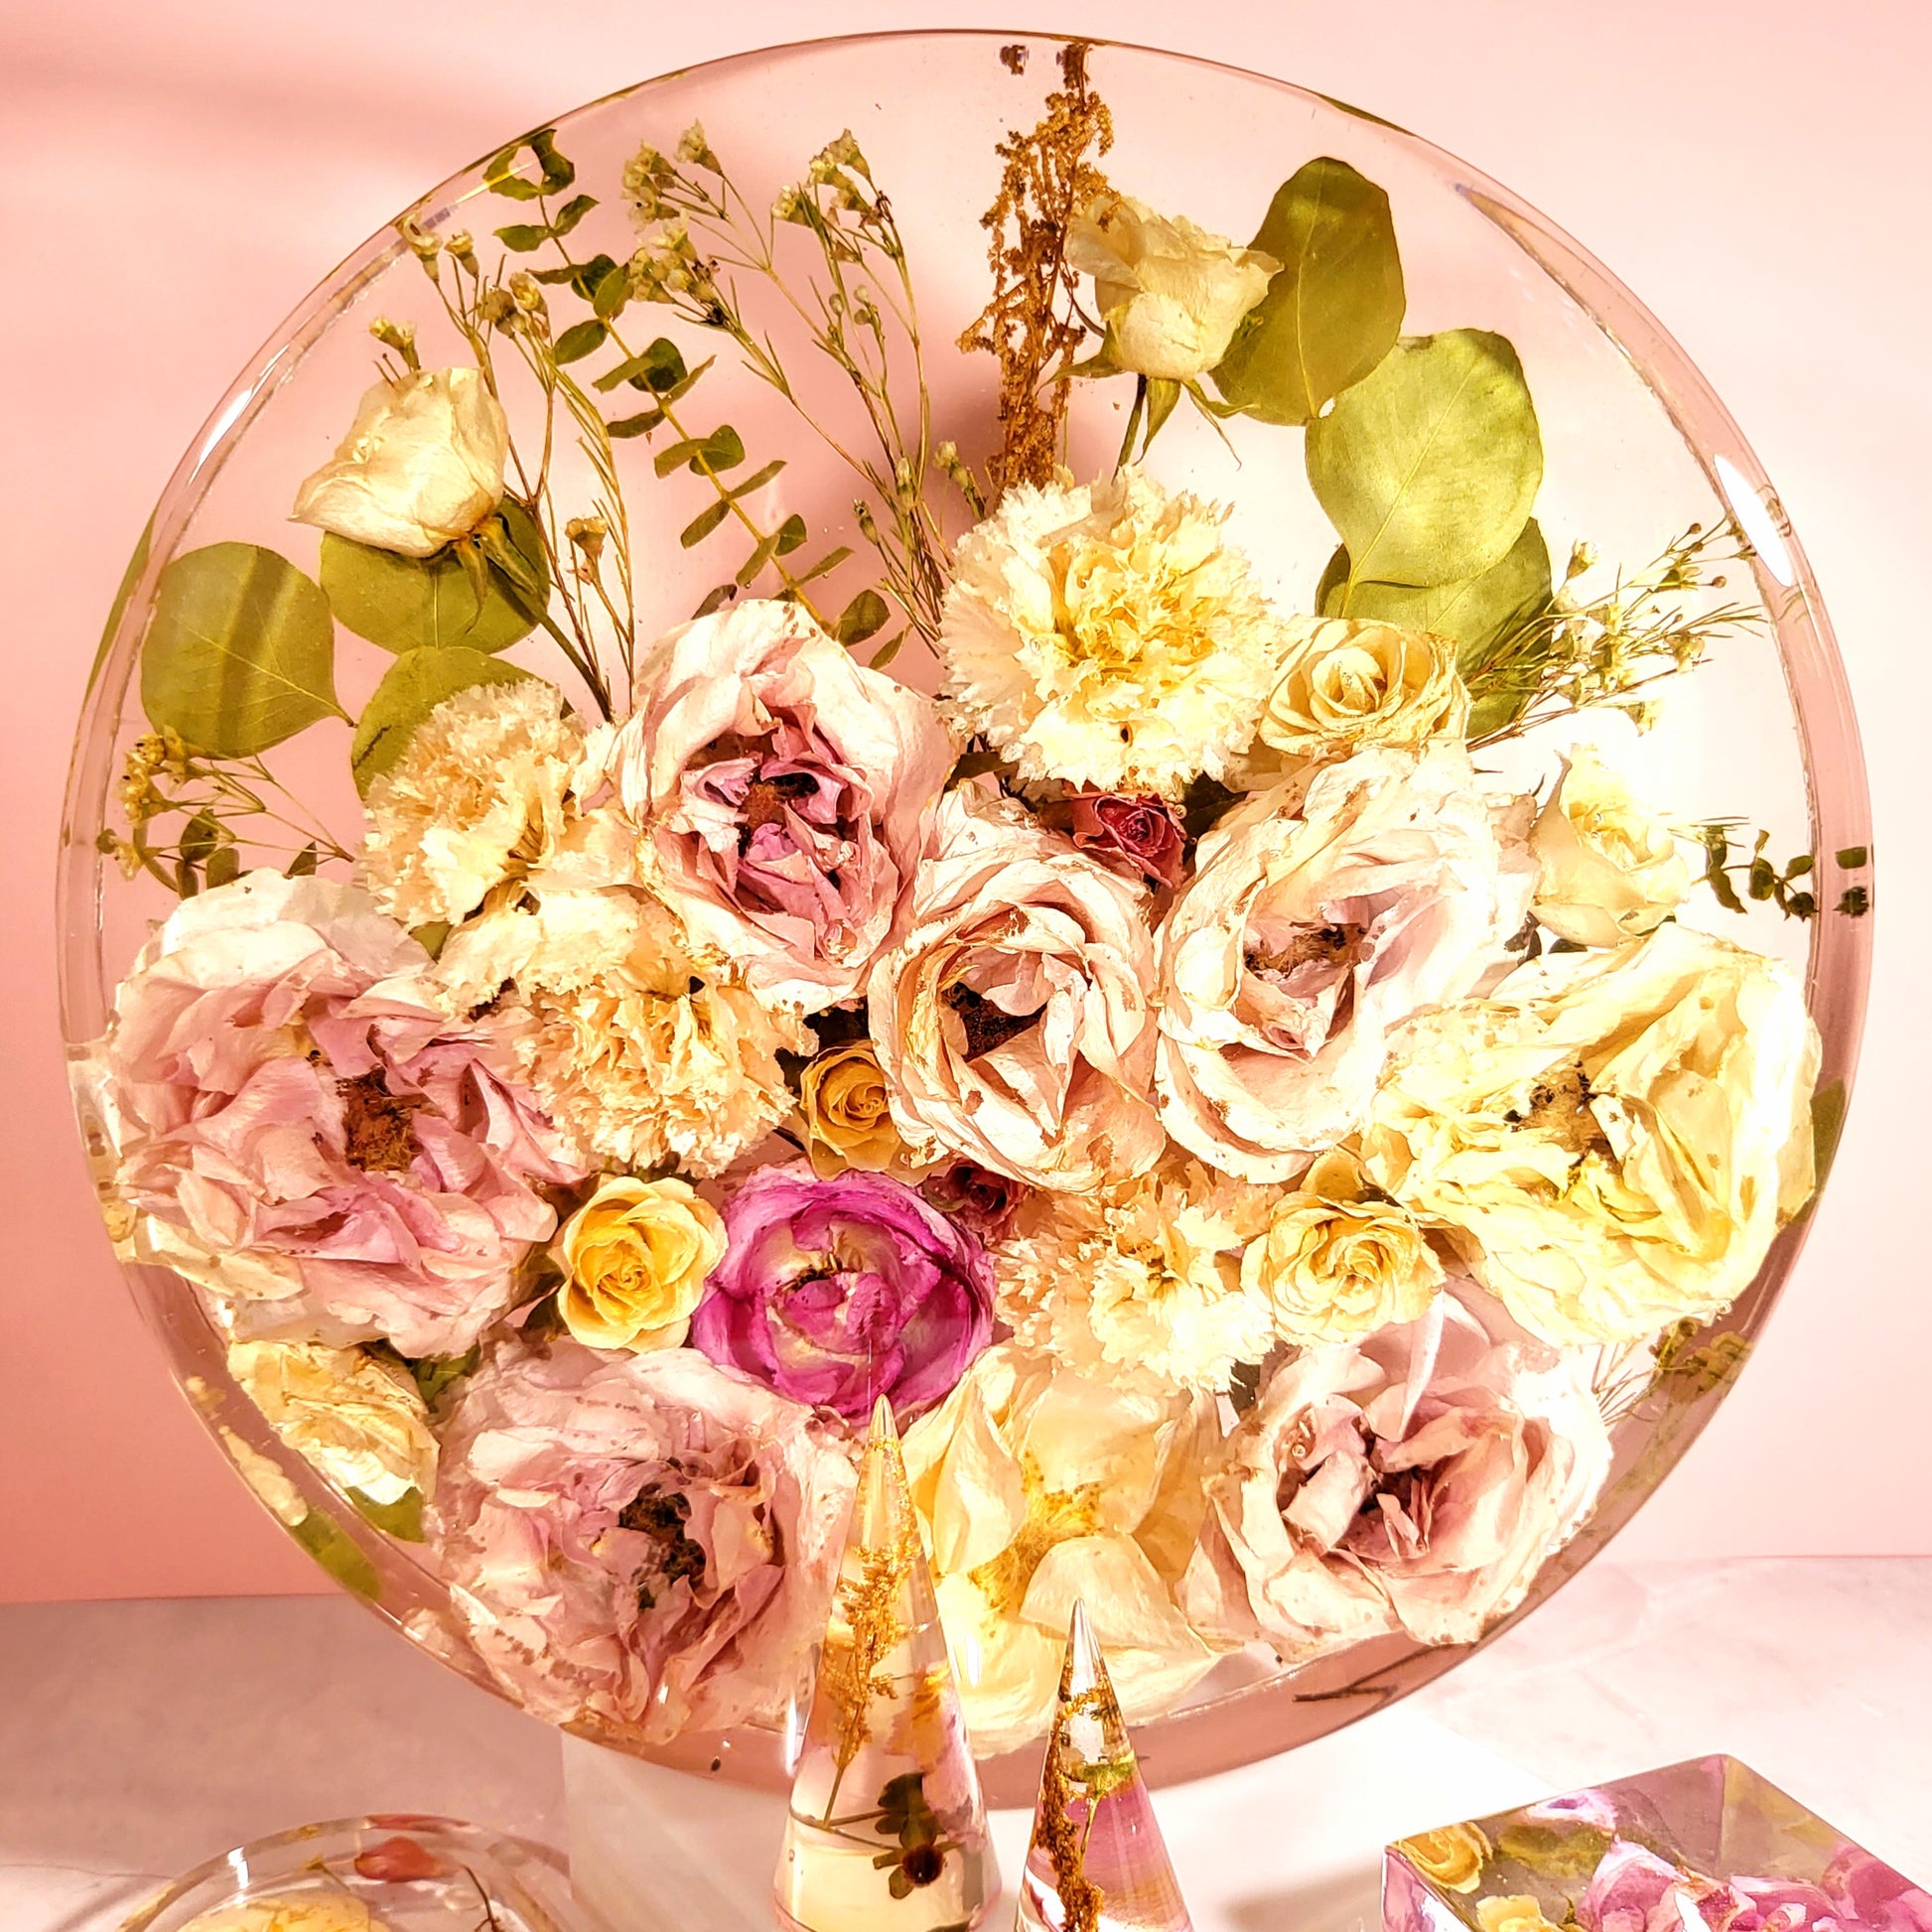 3D Flower Preservation preserving wedding bouquets  Wedding bouquet  preservation, Bouquet preservation, Wedding bouquets